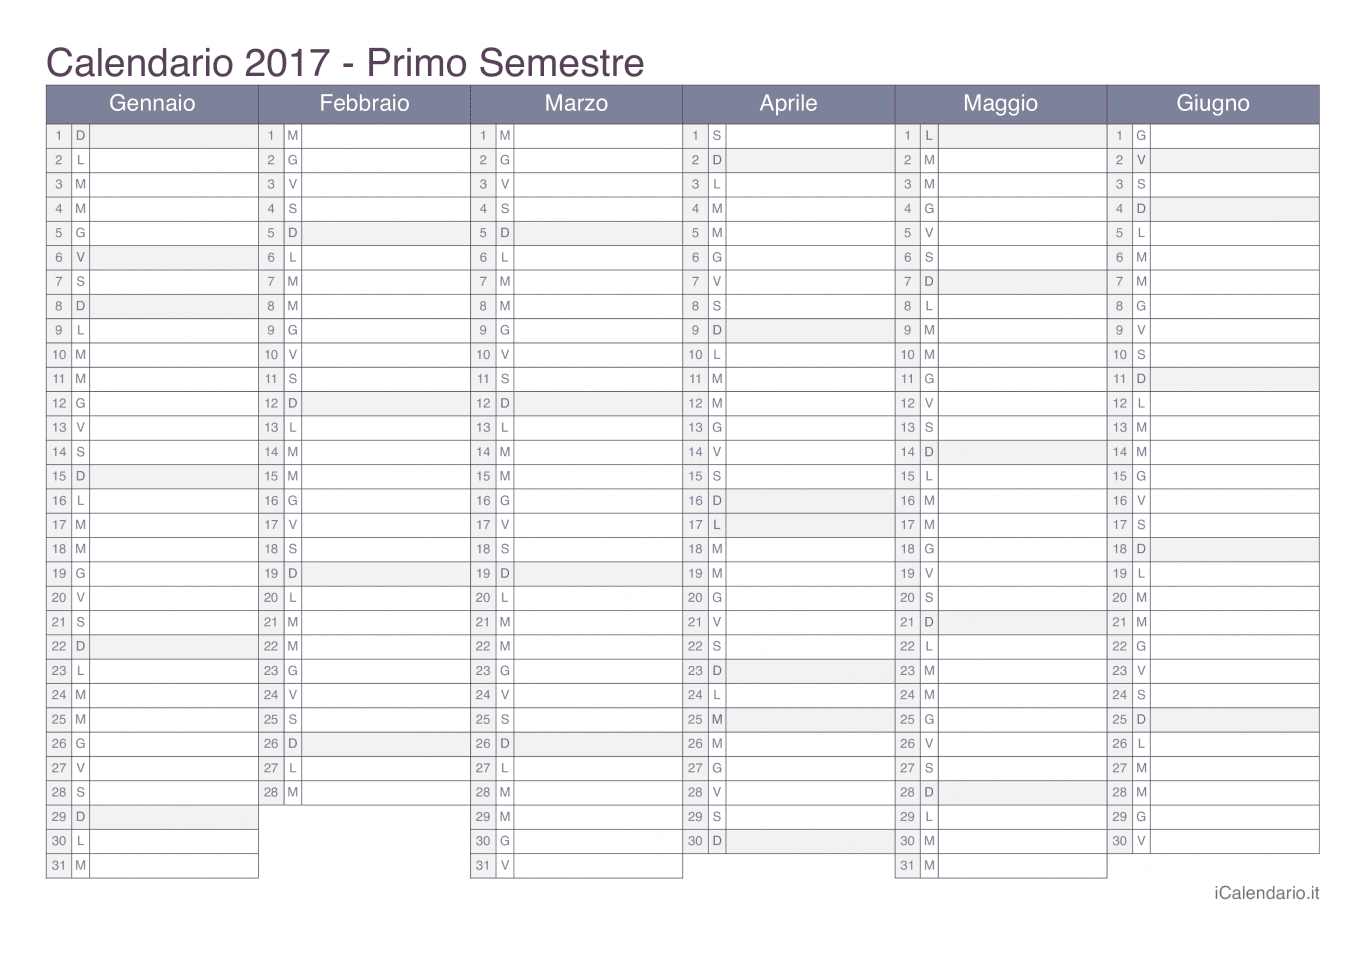 Calendario semestrale 2017 - Office